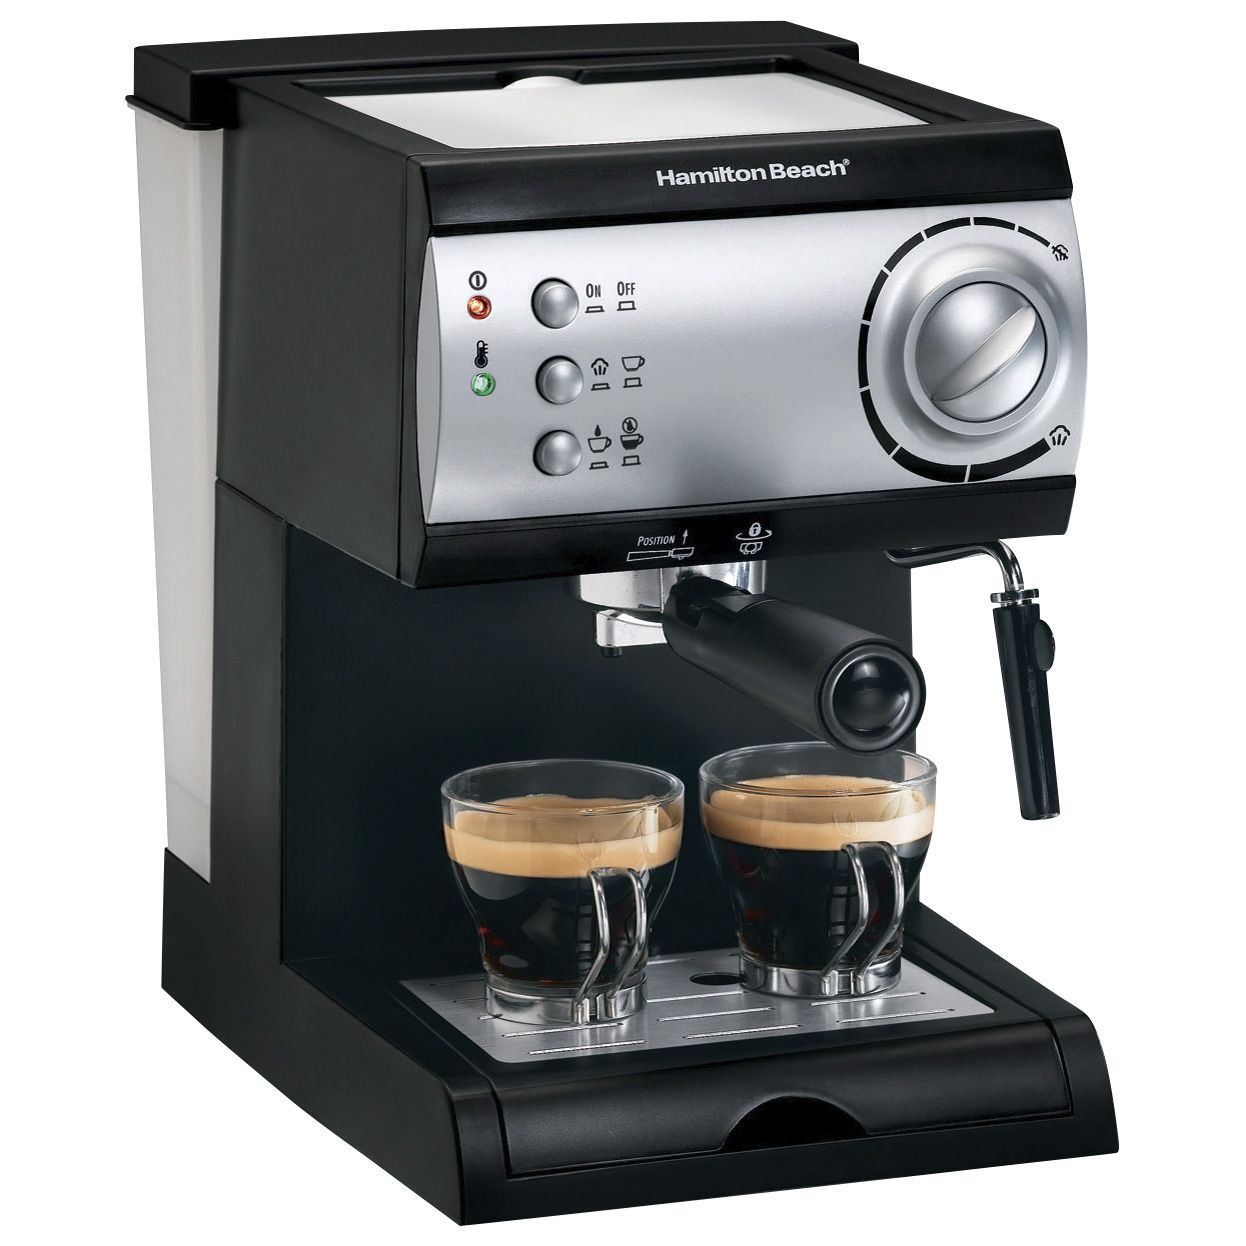 Fingerhut - De'Longhi All-In-One Programmable Coffee and Espresso